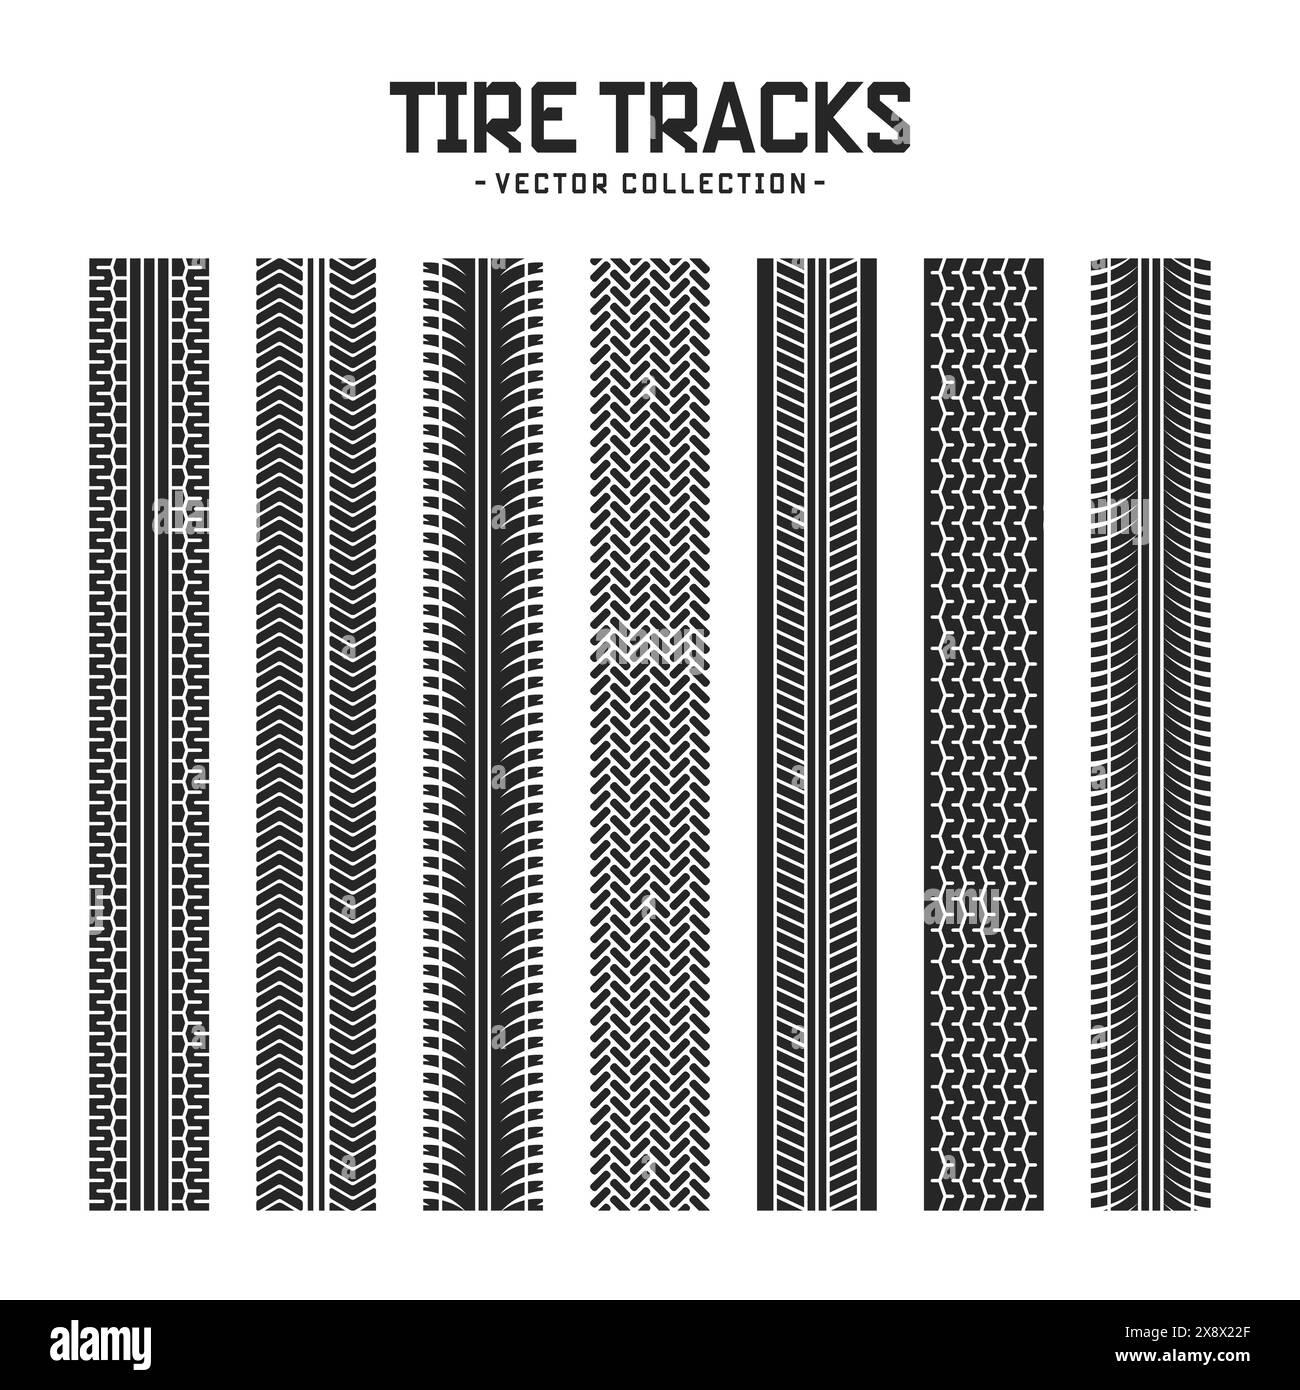 Tire tracks, wheel braking marks. Truck, car or motorcycle tread pattern silhouettes. Auto race, motorsport, speed racing design element. Vector Stock Vector